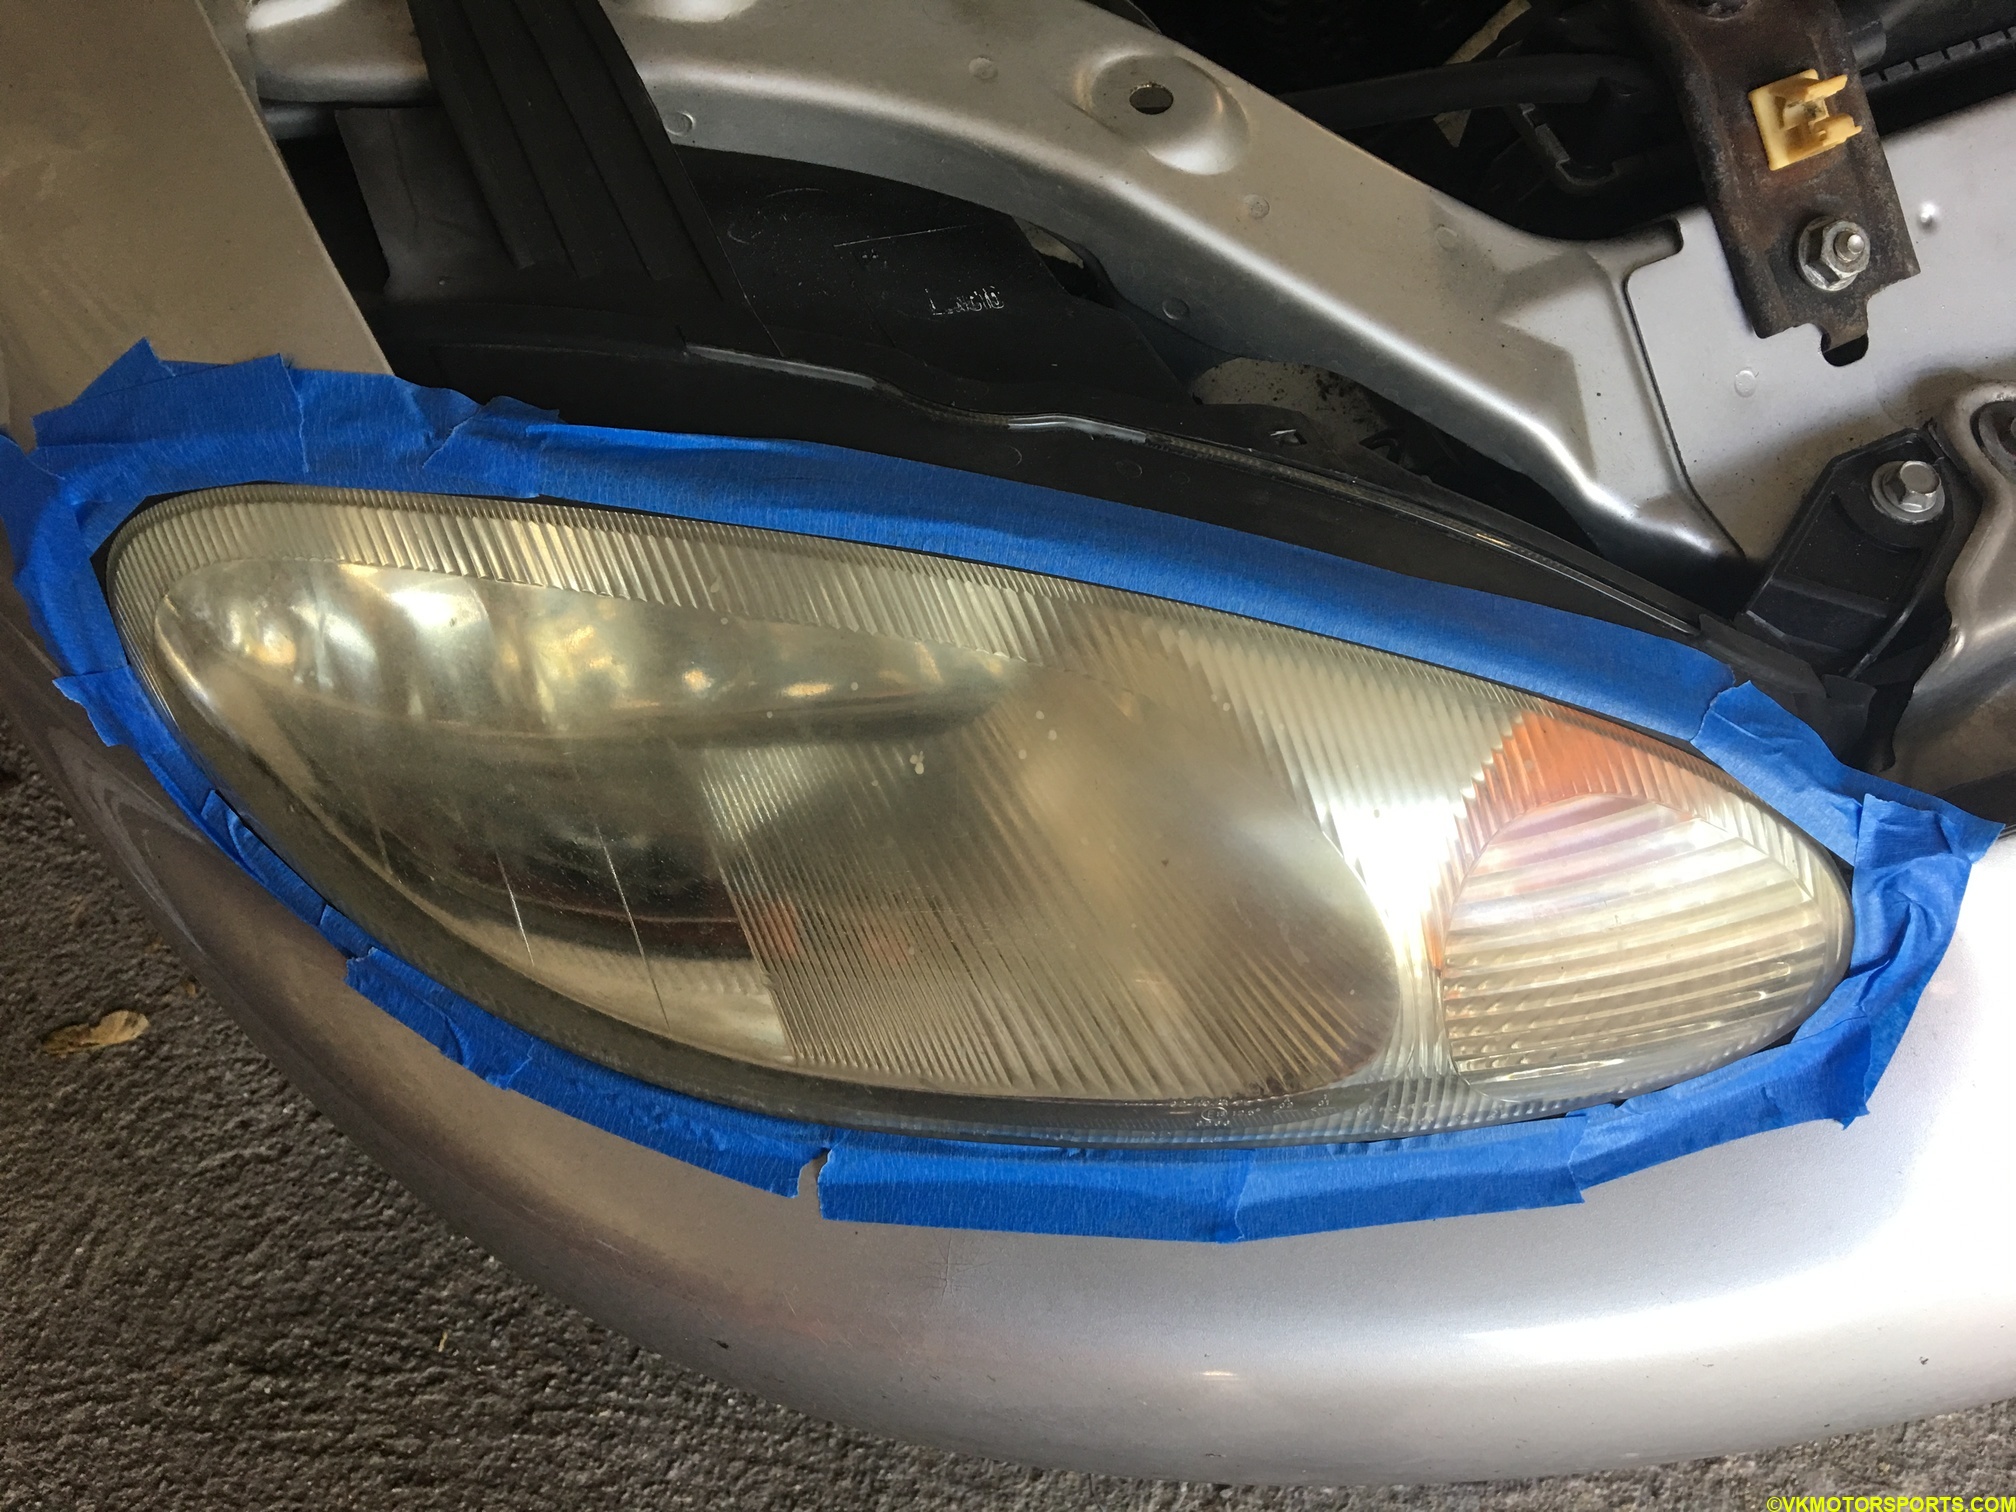 Passenger-side headlight with masking tape